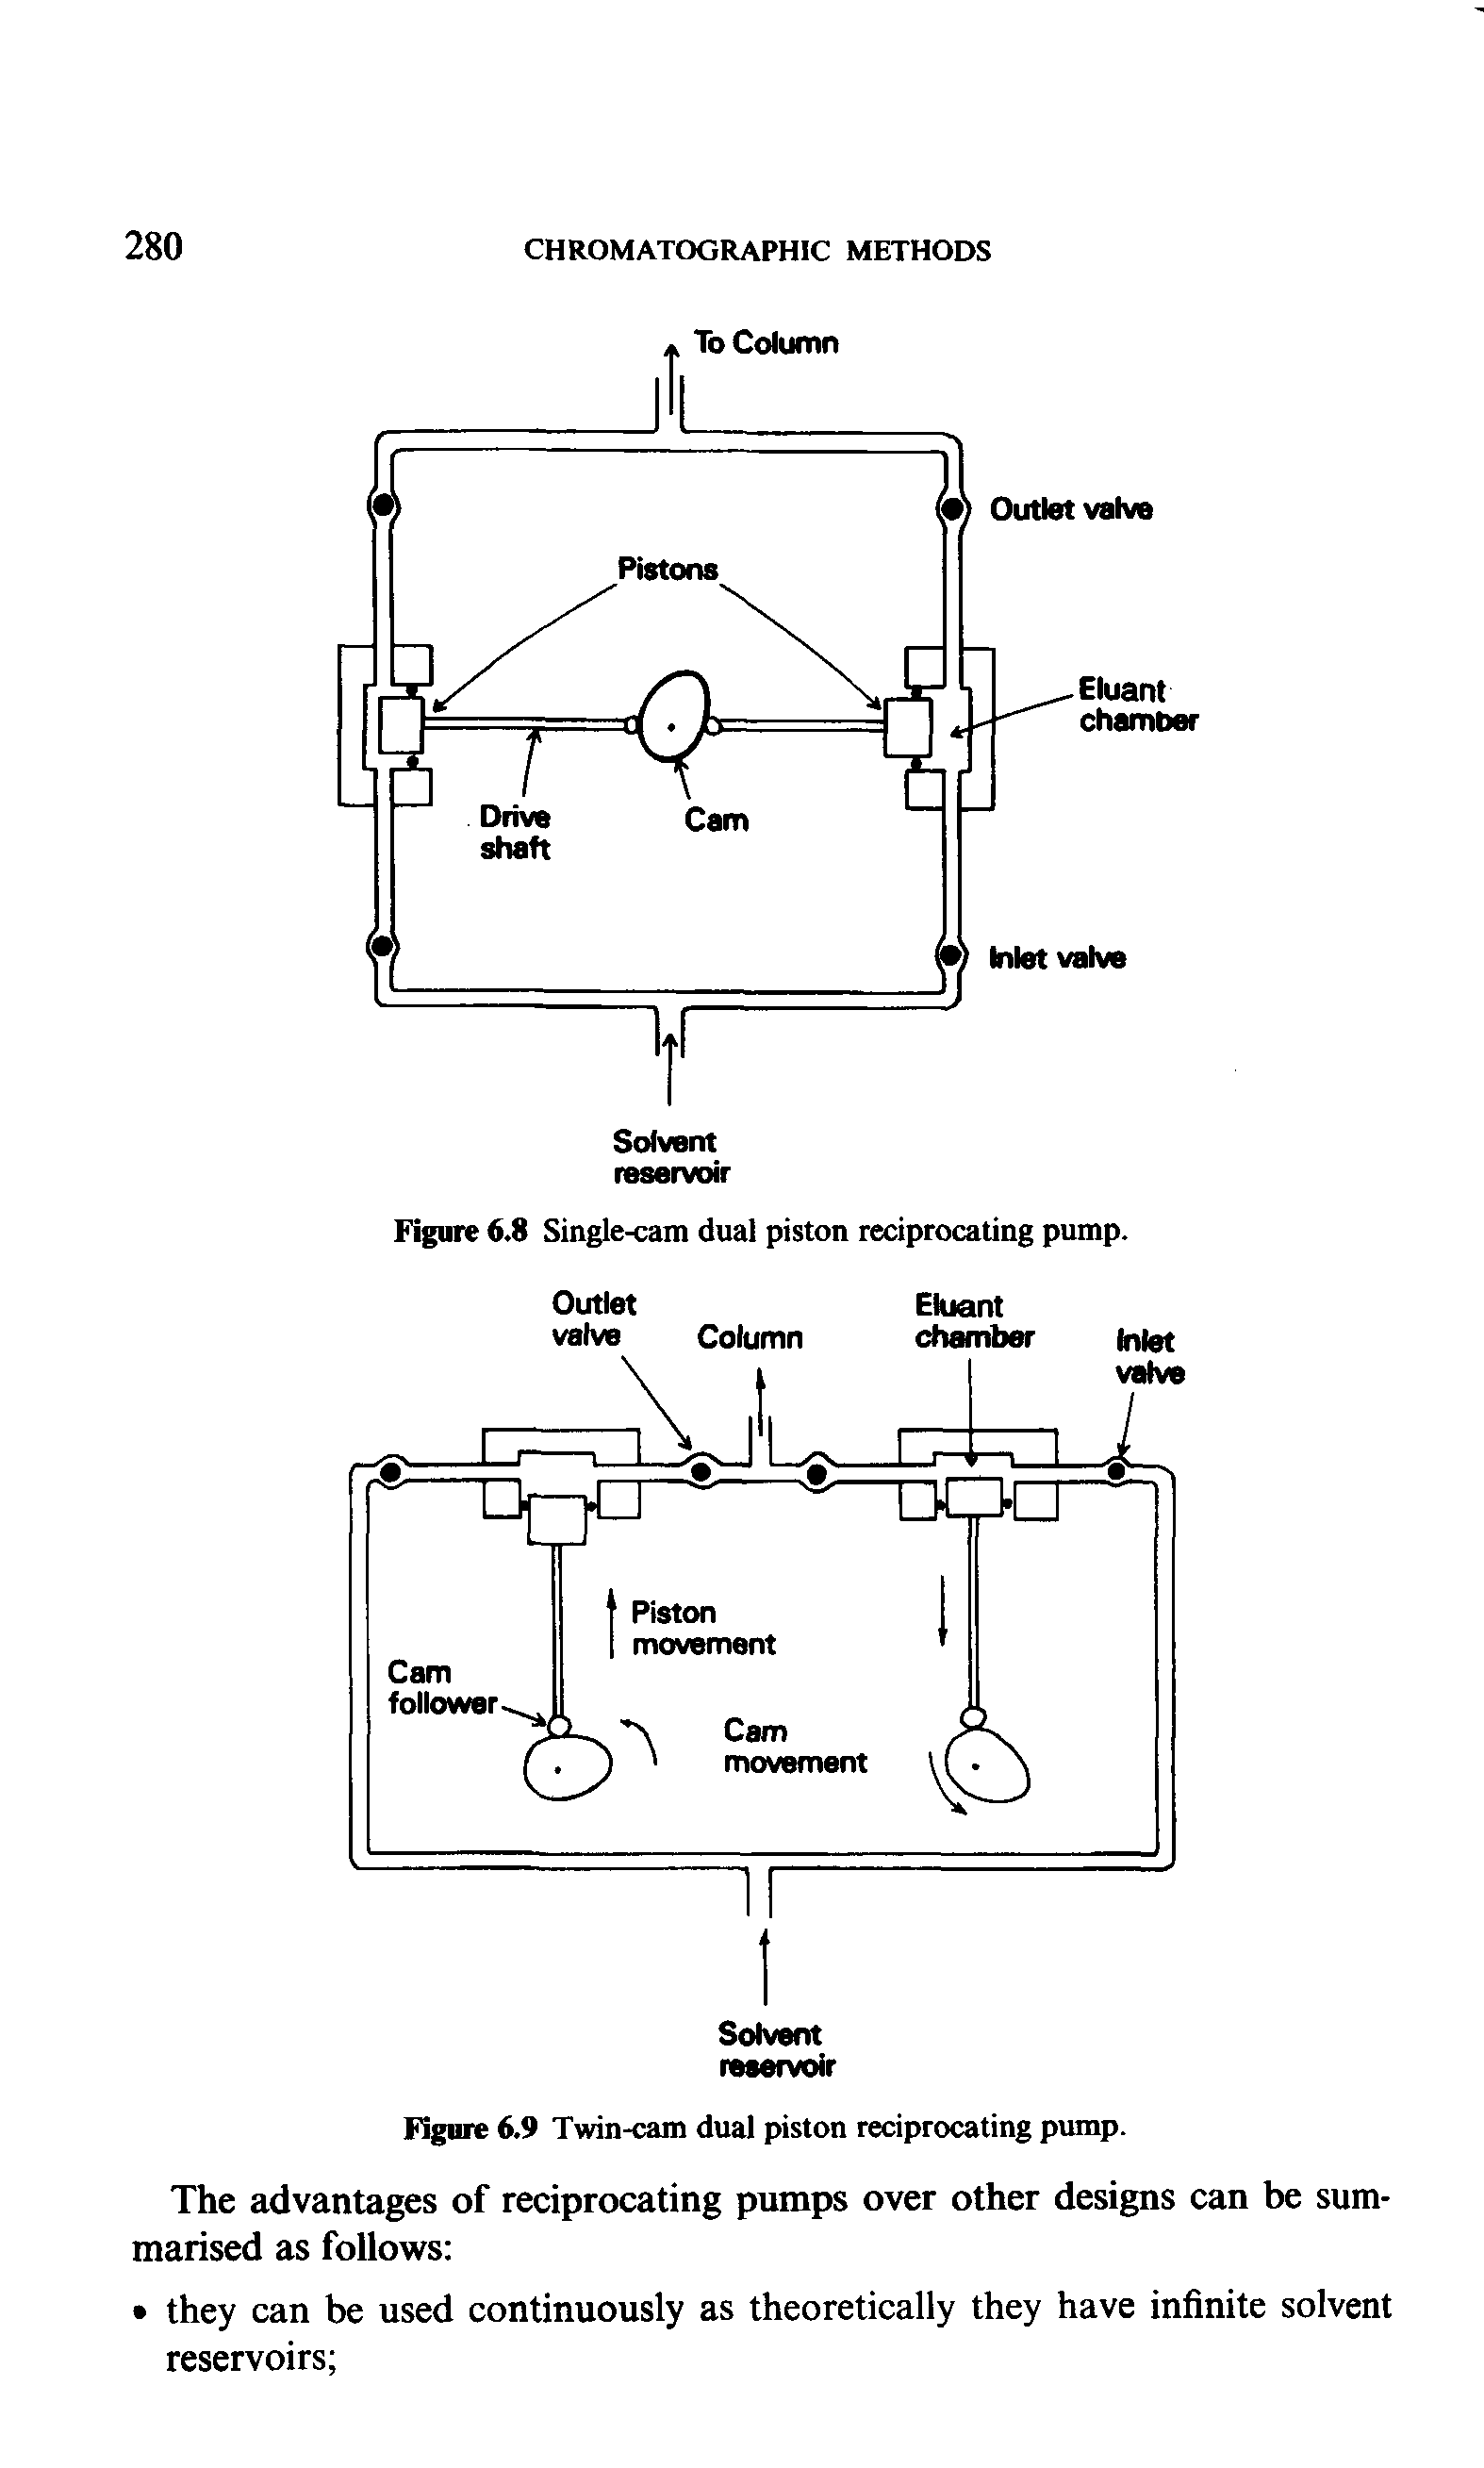 Figure 6.8 Single-cam dual piston reciprocating pump.